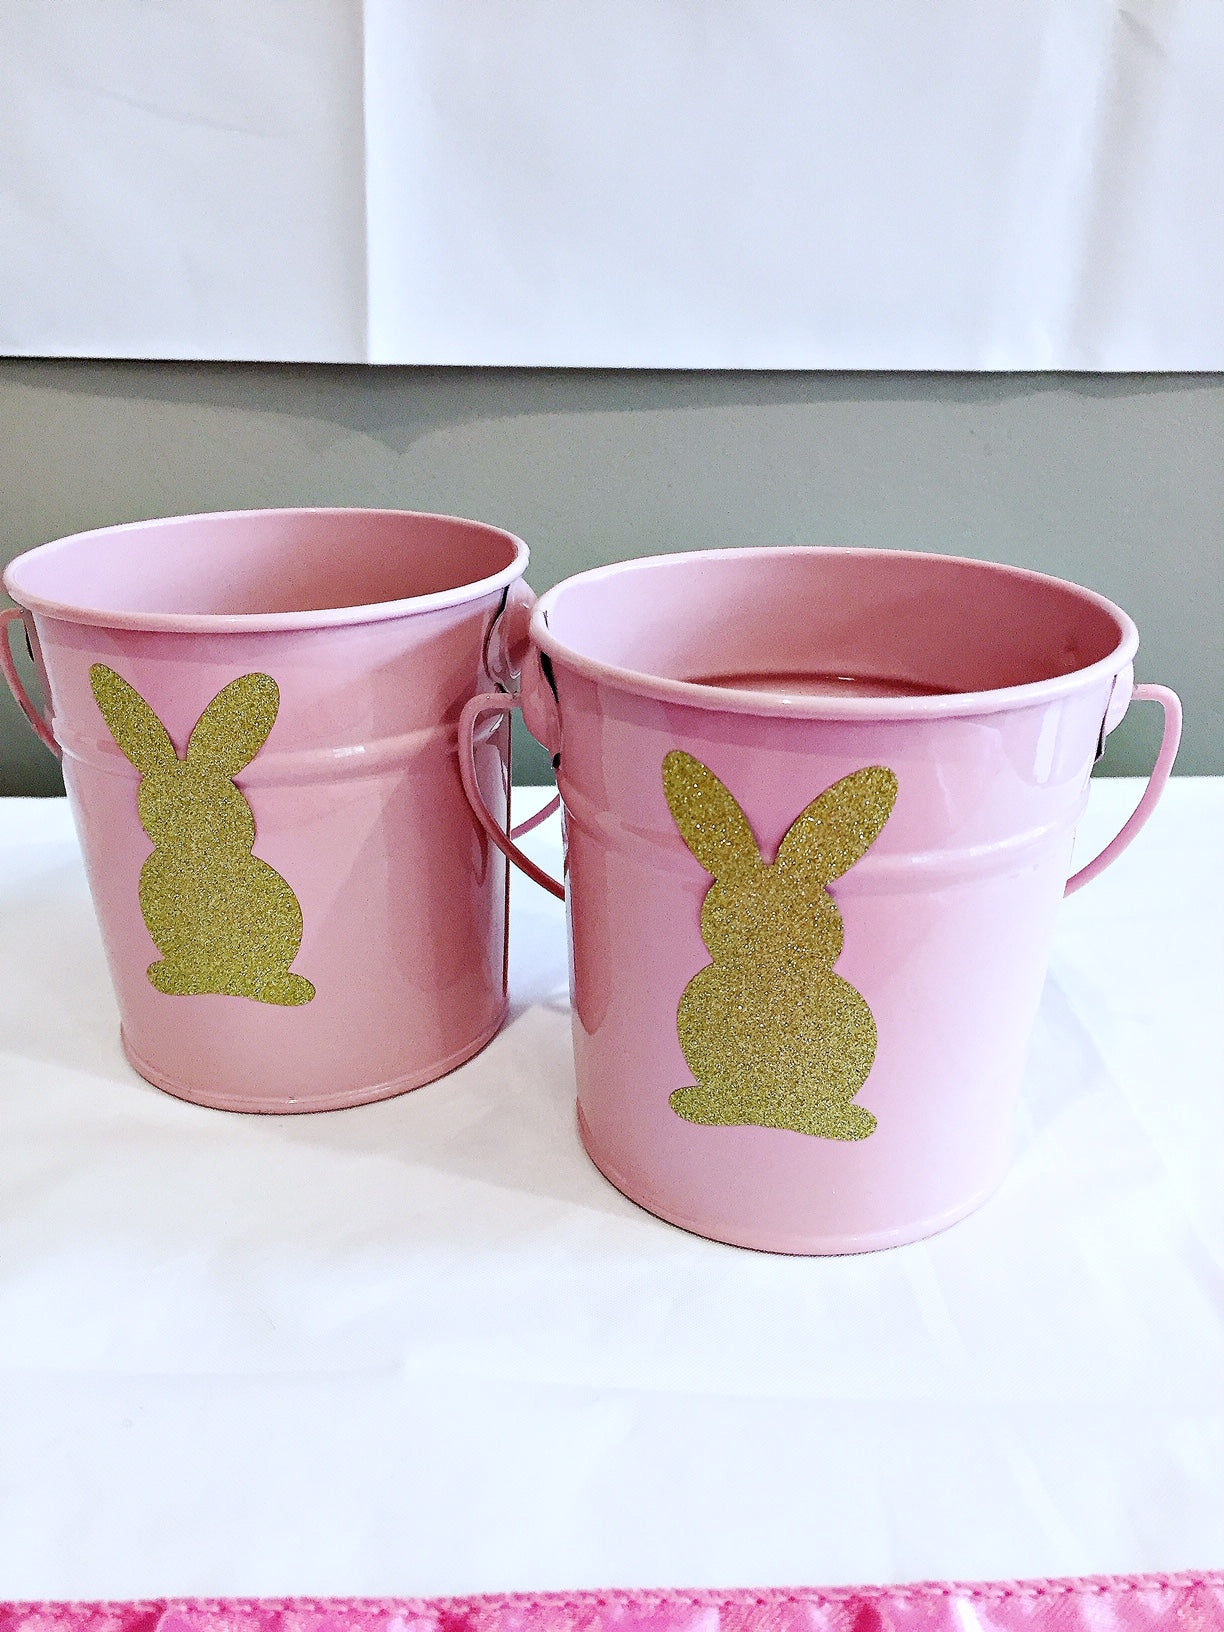 Bunny buckets